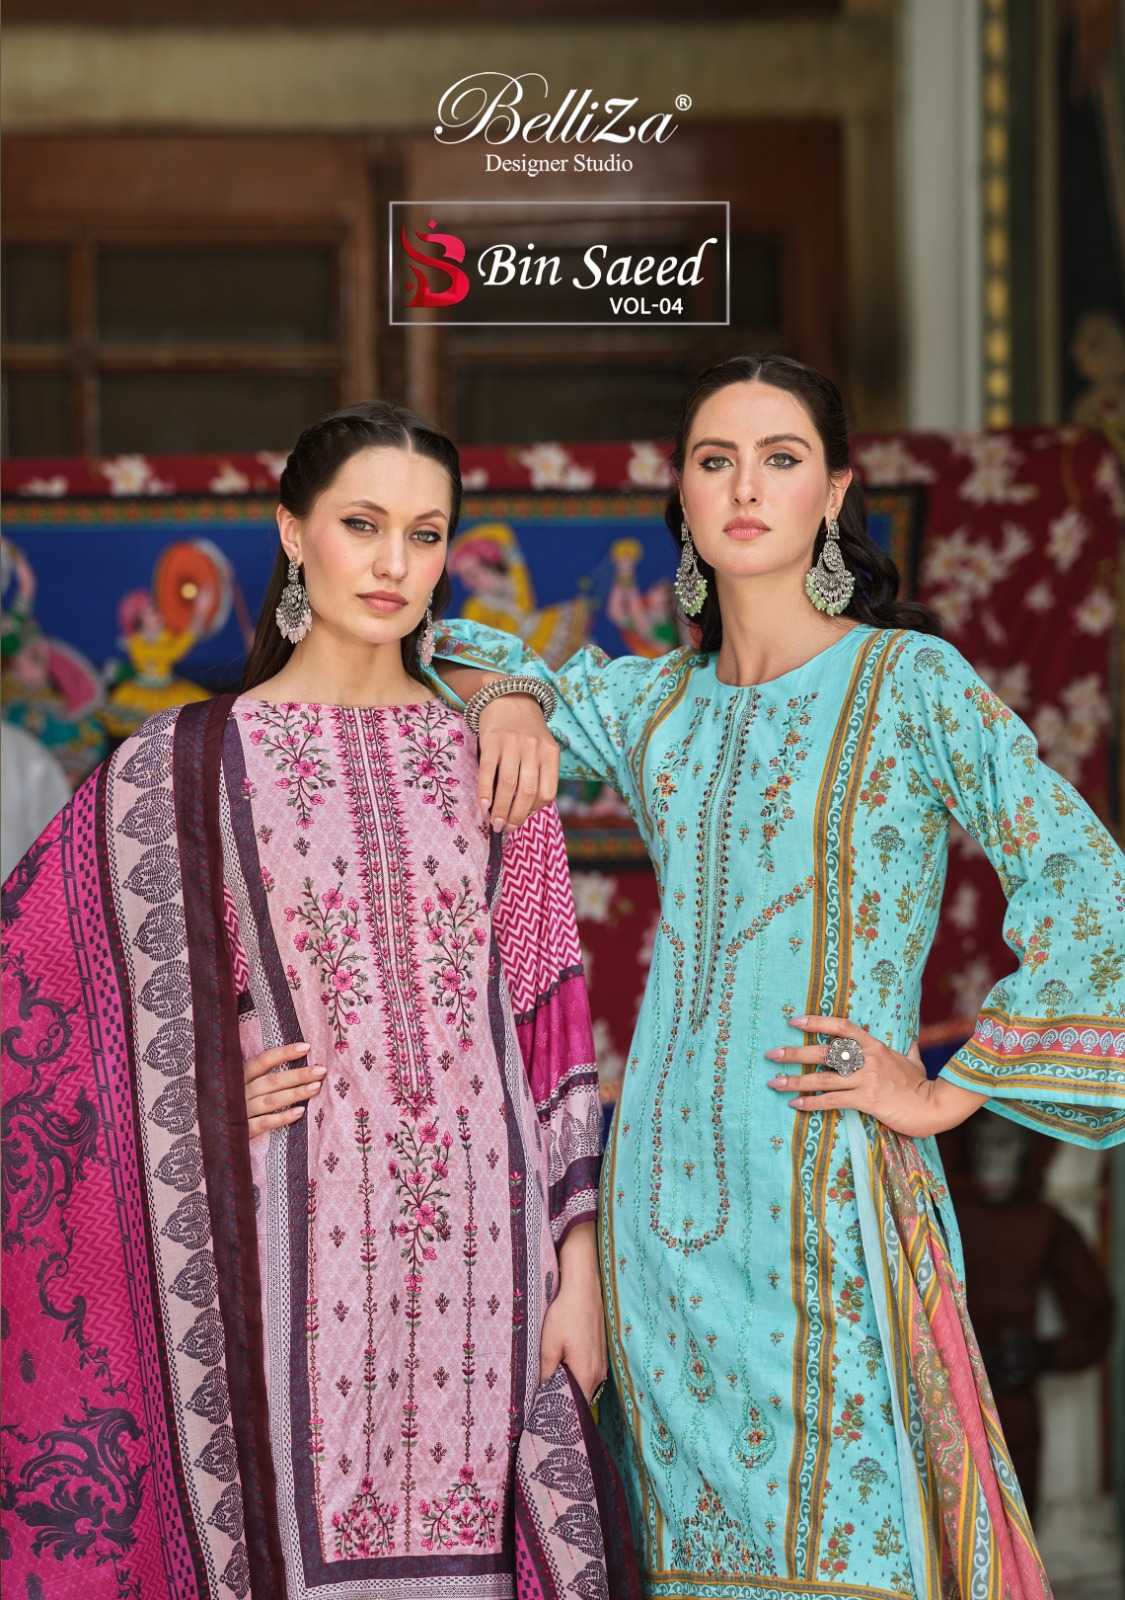 belliza designer bin saeed vol 4 simple pakistani style salwar kameez